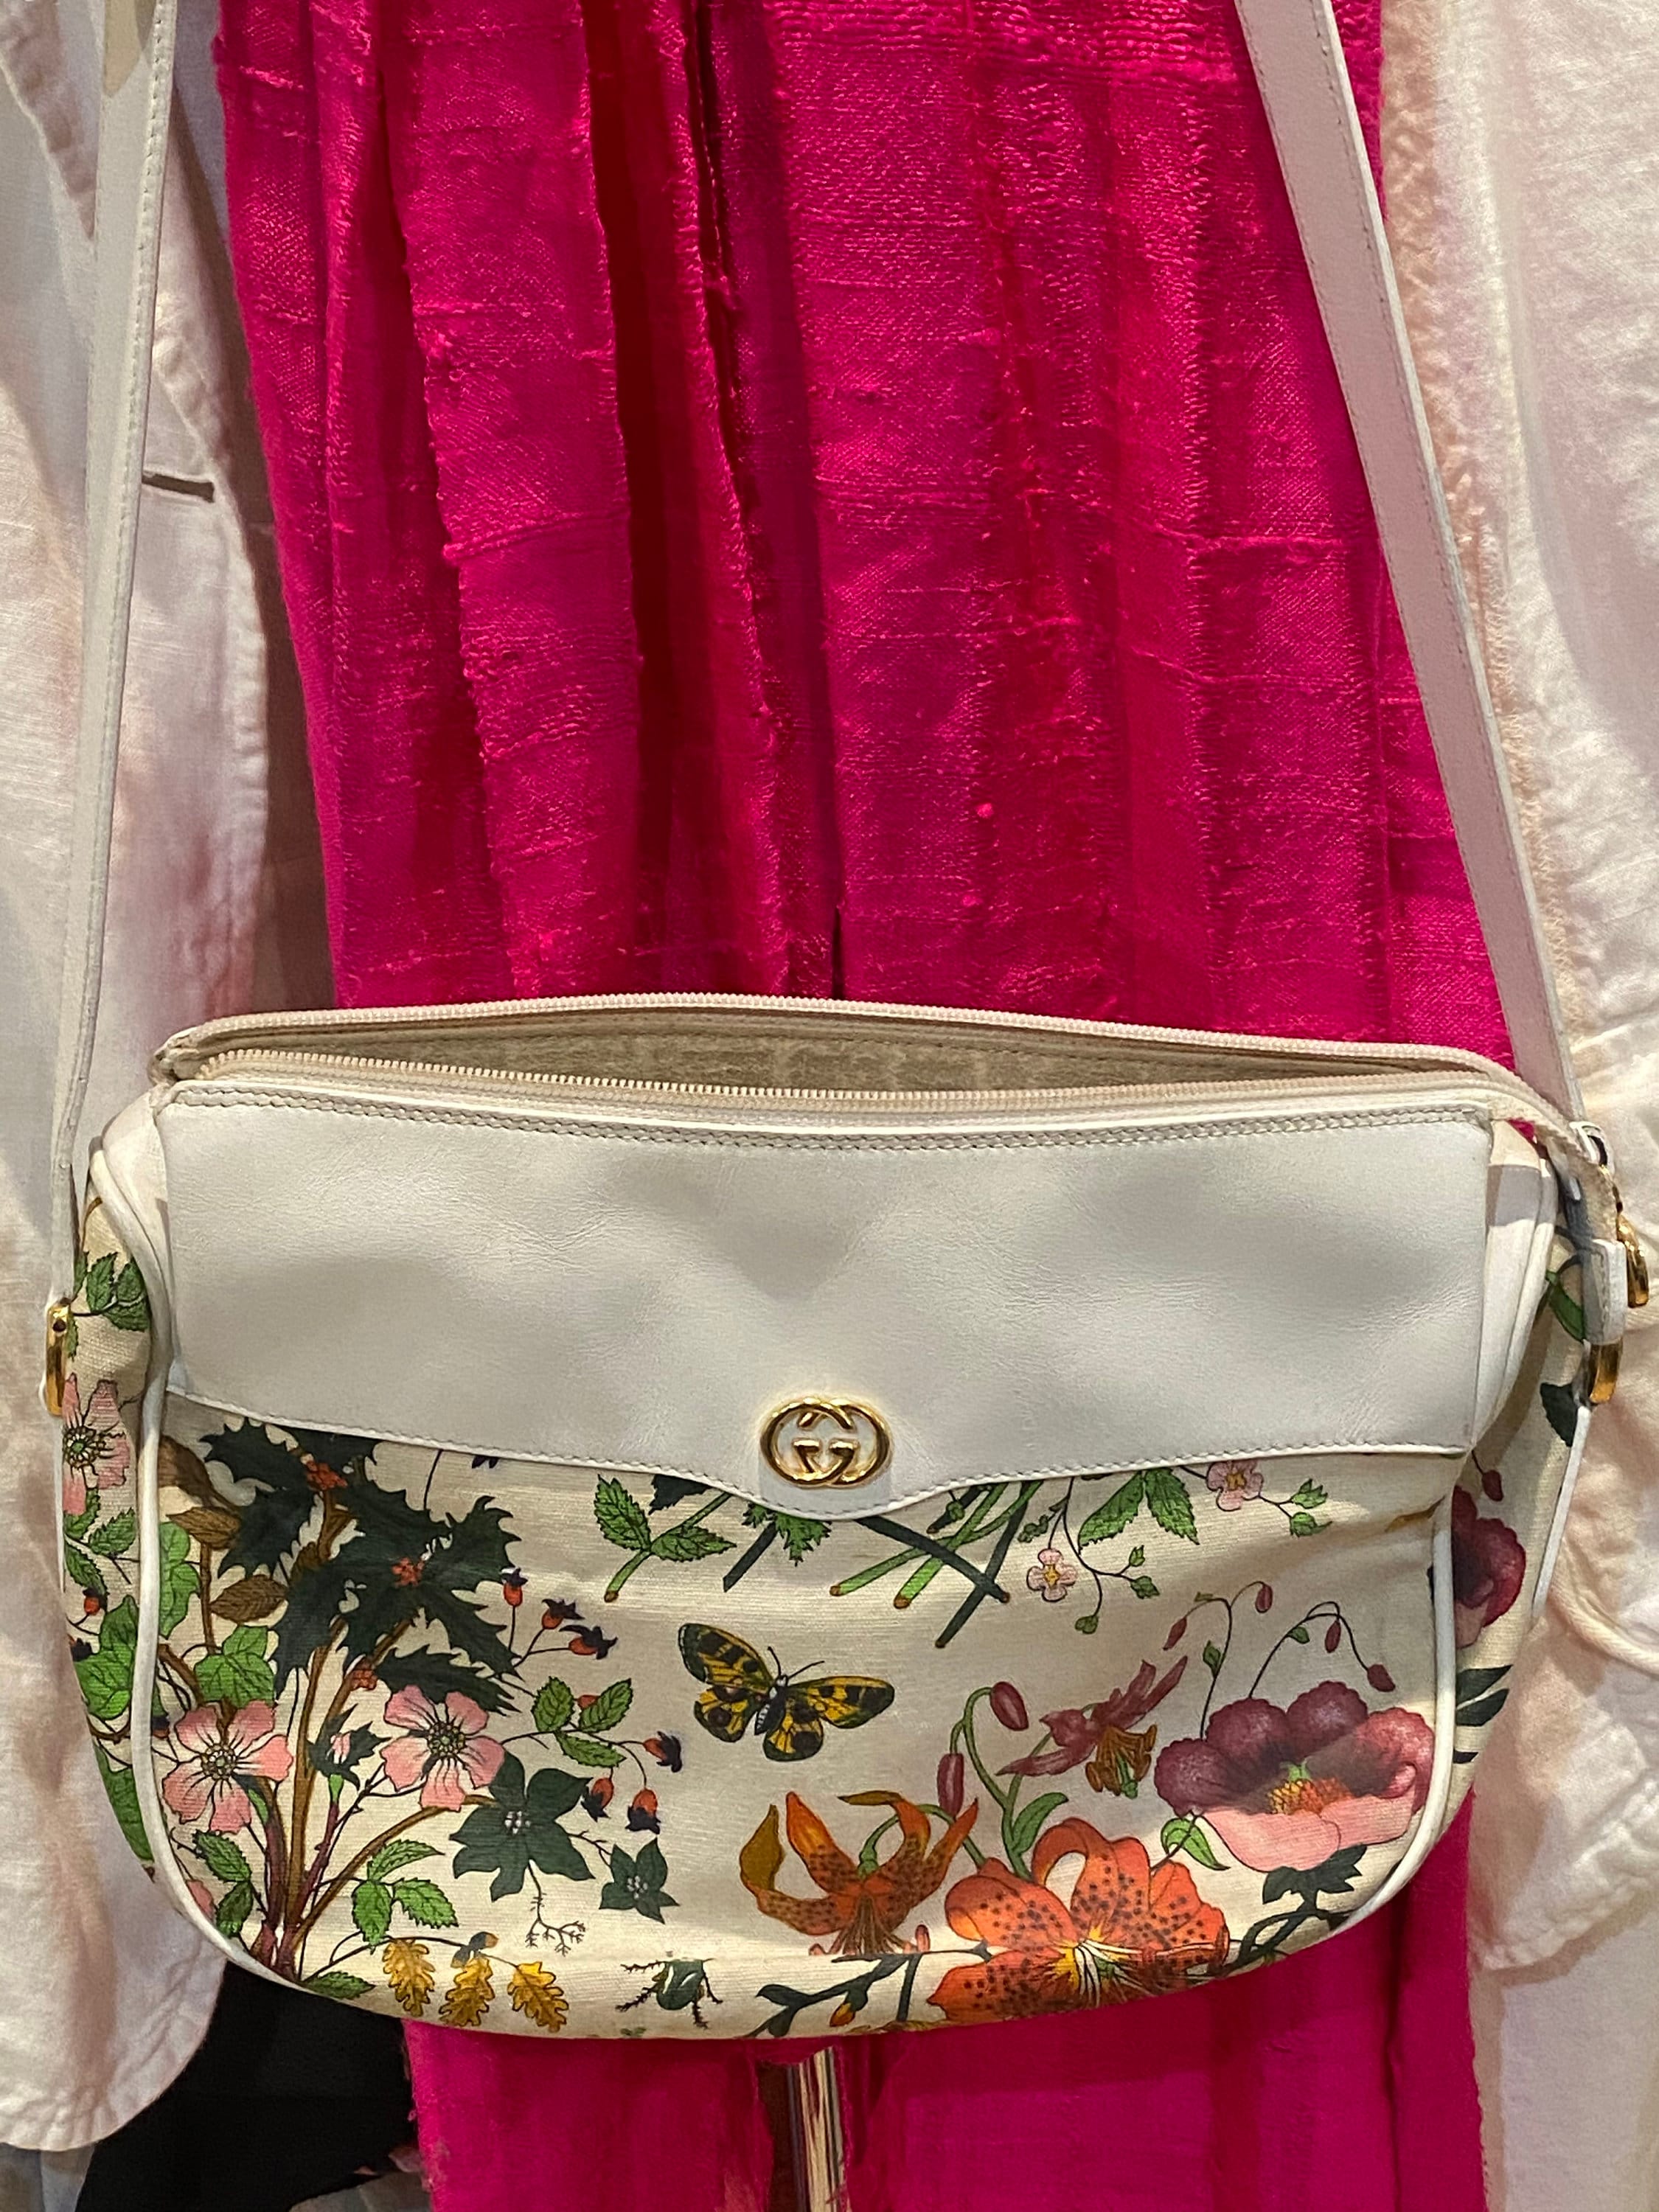 Gucci Floral Bag - Etsy